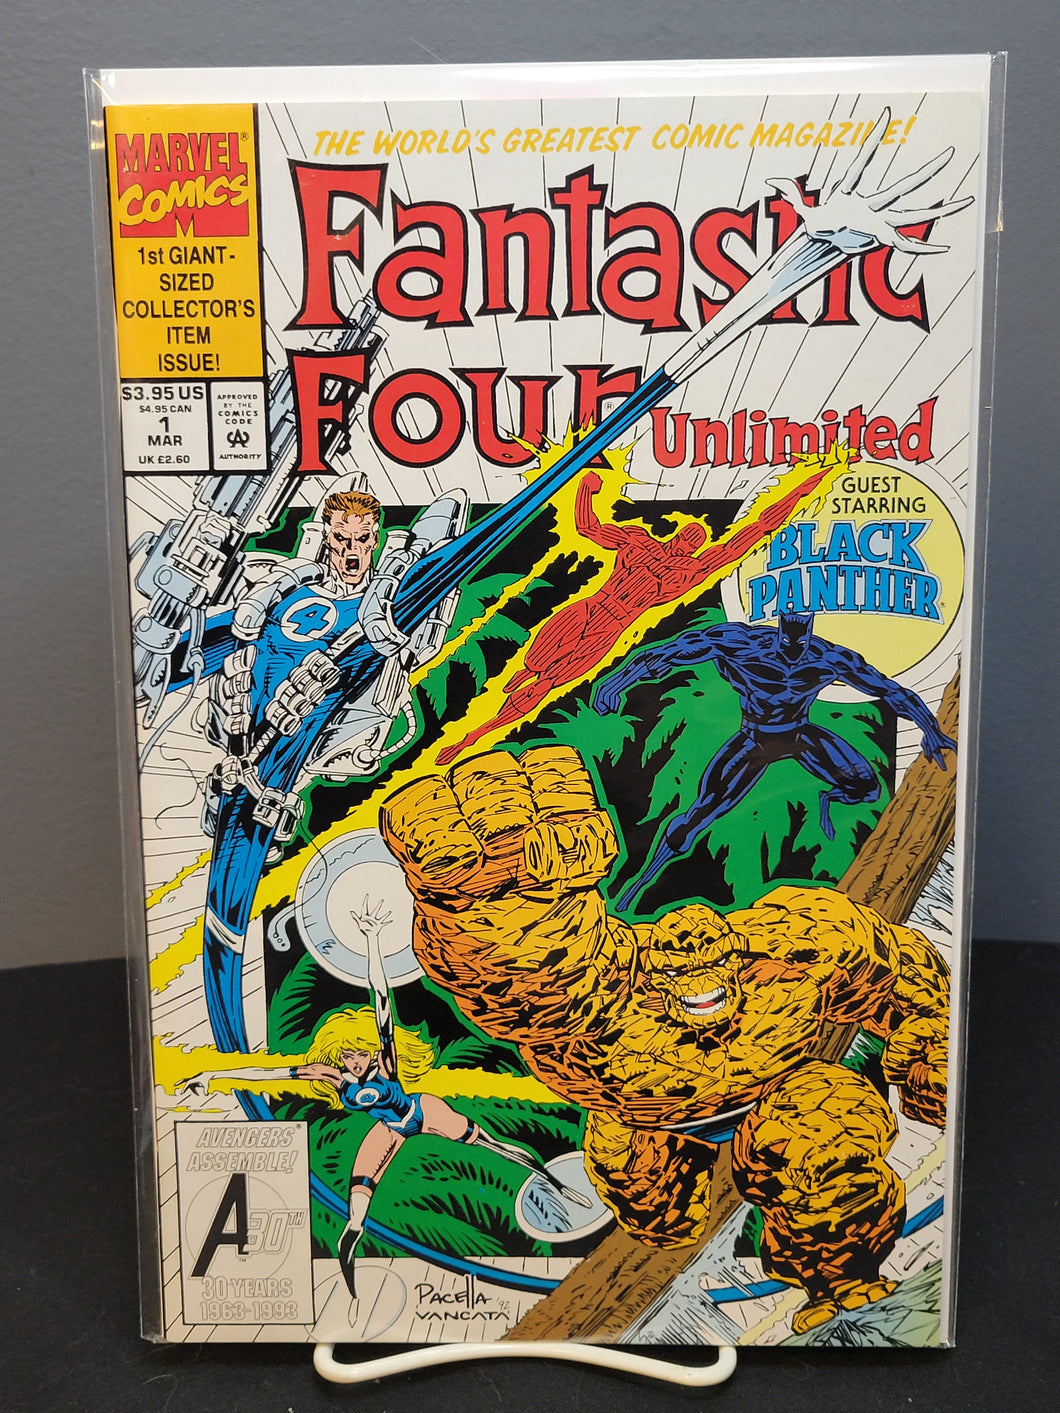 Fantastic Four Unlimited #1